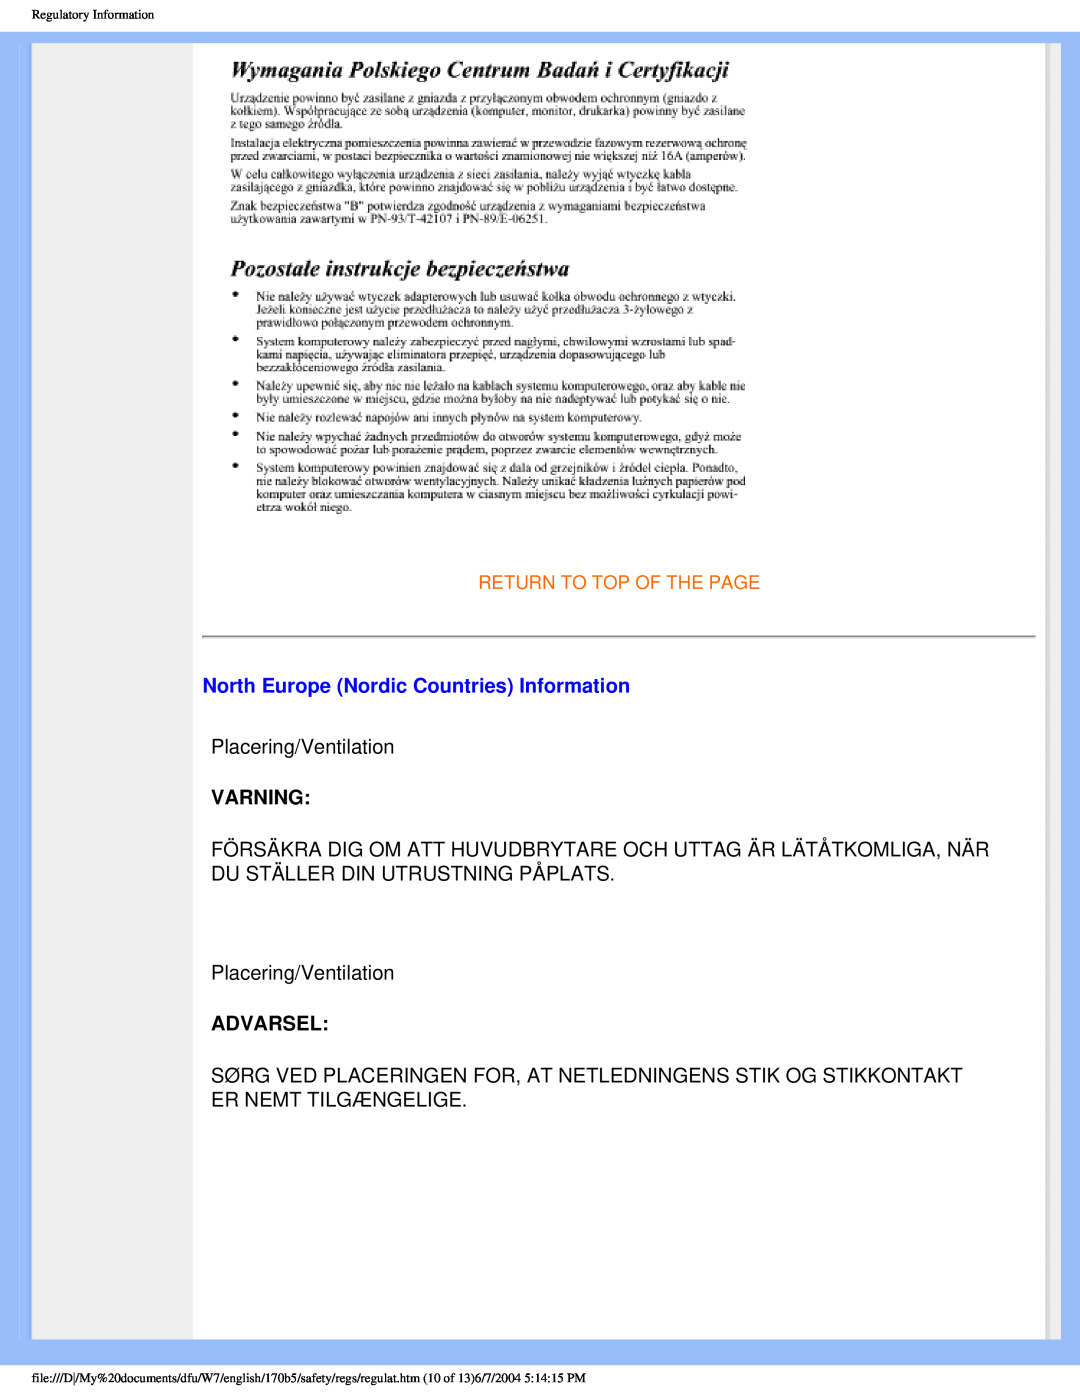 Philips 170B5 user manual North Europe Nordic Countries Information, Varning, Advarsel 